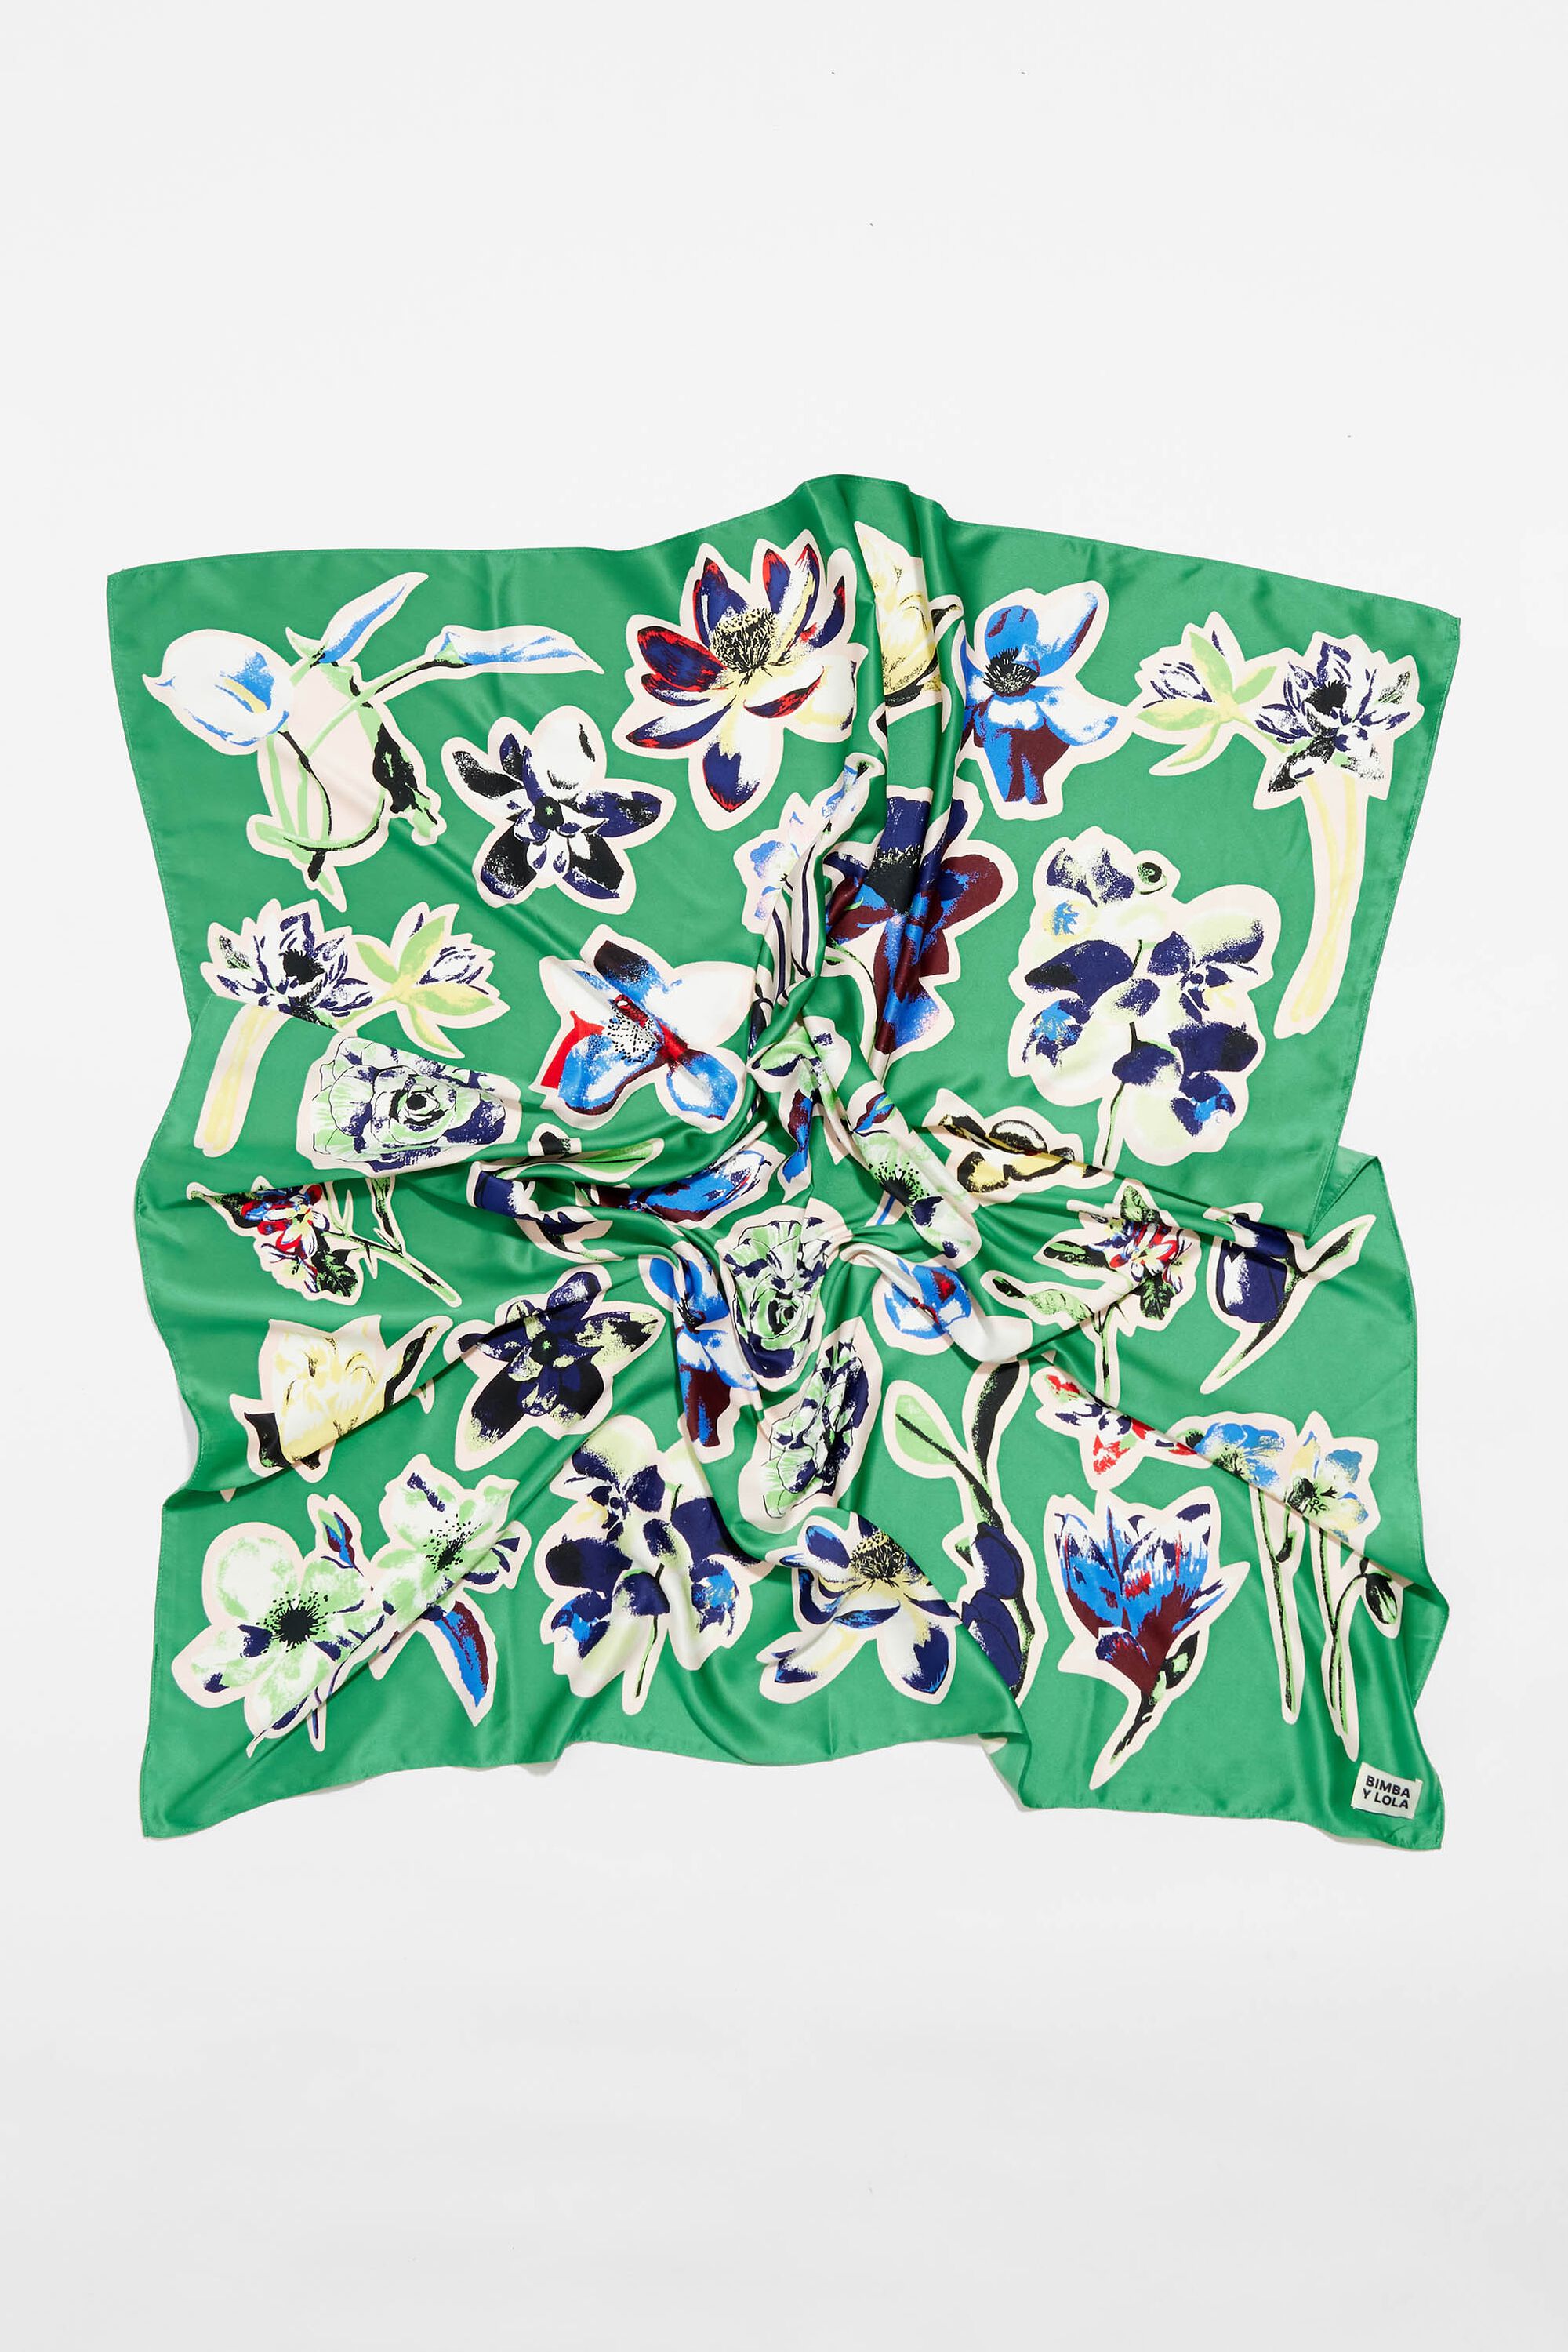 Bimba y Lola Floral-Print Scarf - ShopStyle Scarves & Wraps